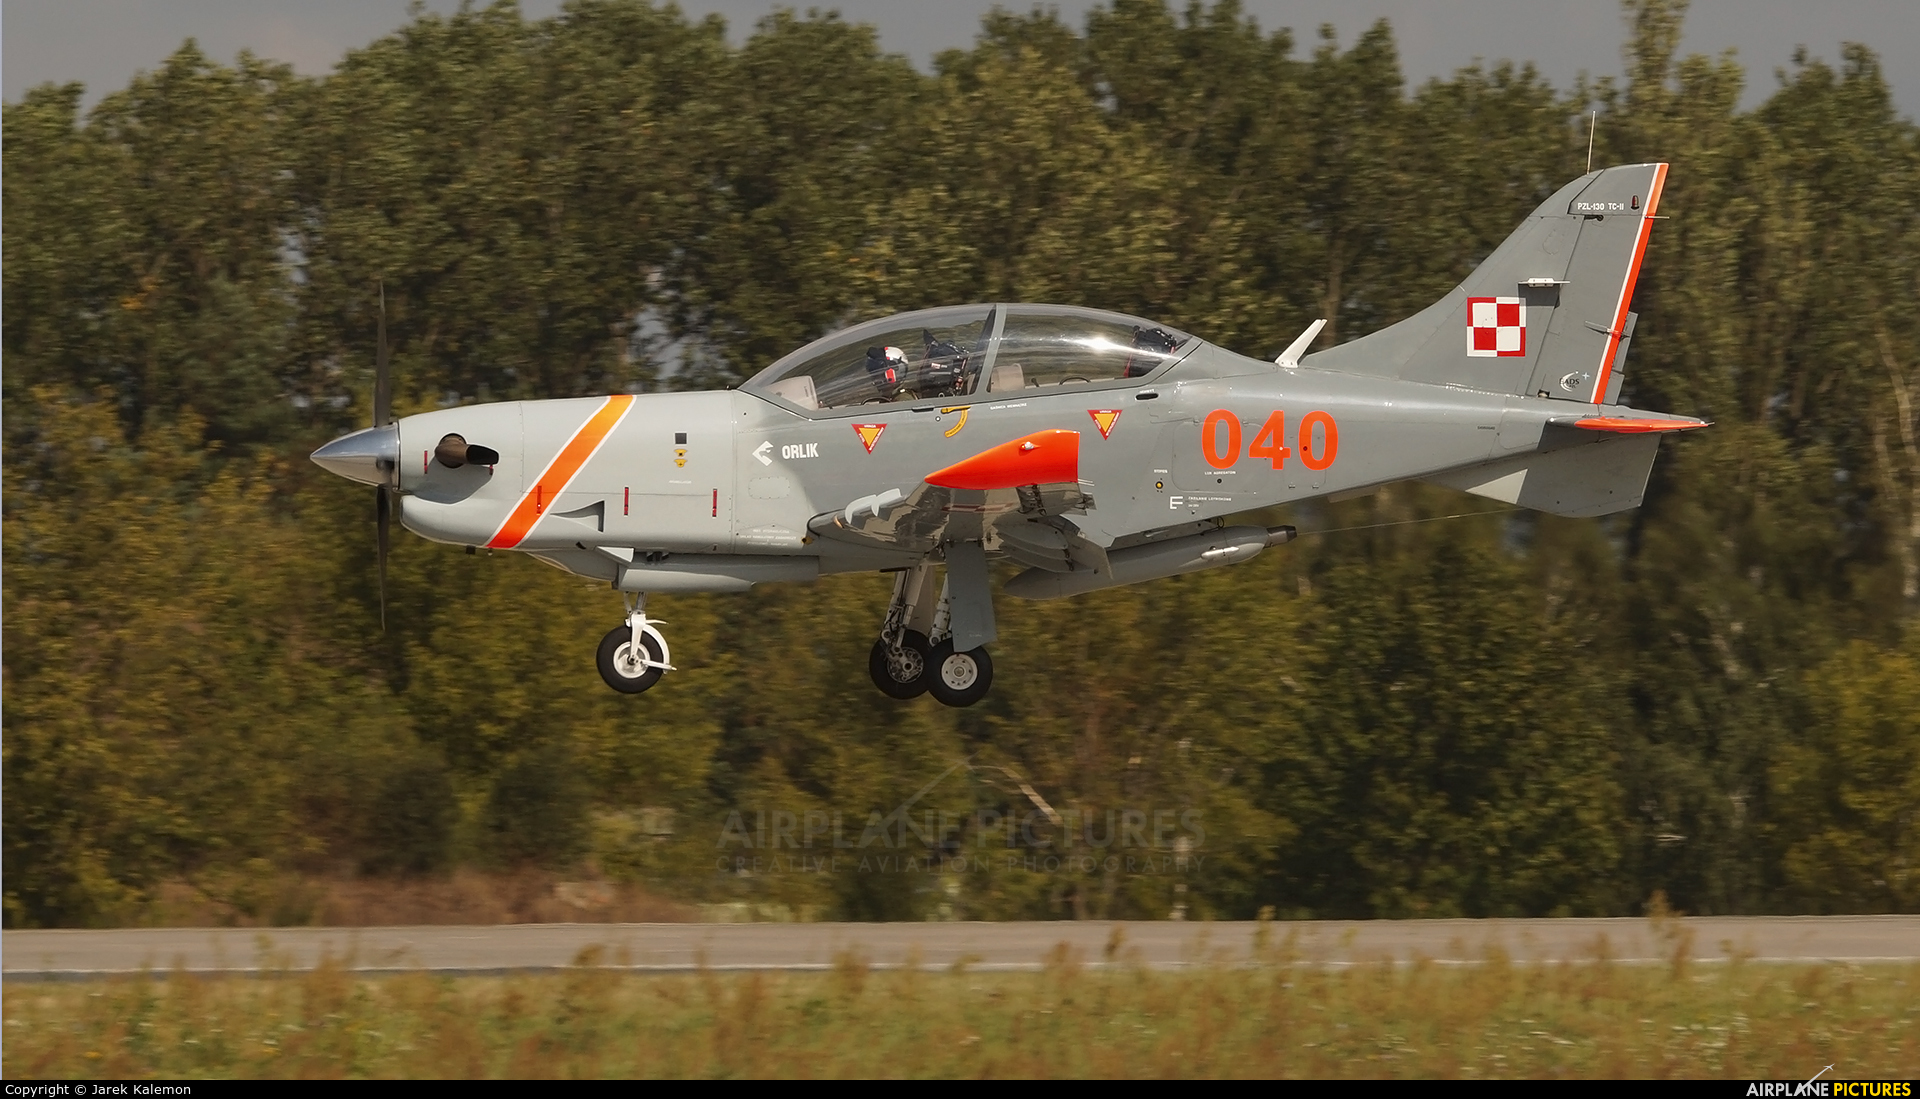 Poland - Air Force "Orlik Acrobatic Group" 040 aircraft at Poznań - Krzesiny